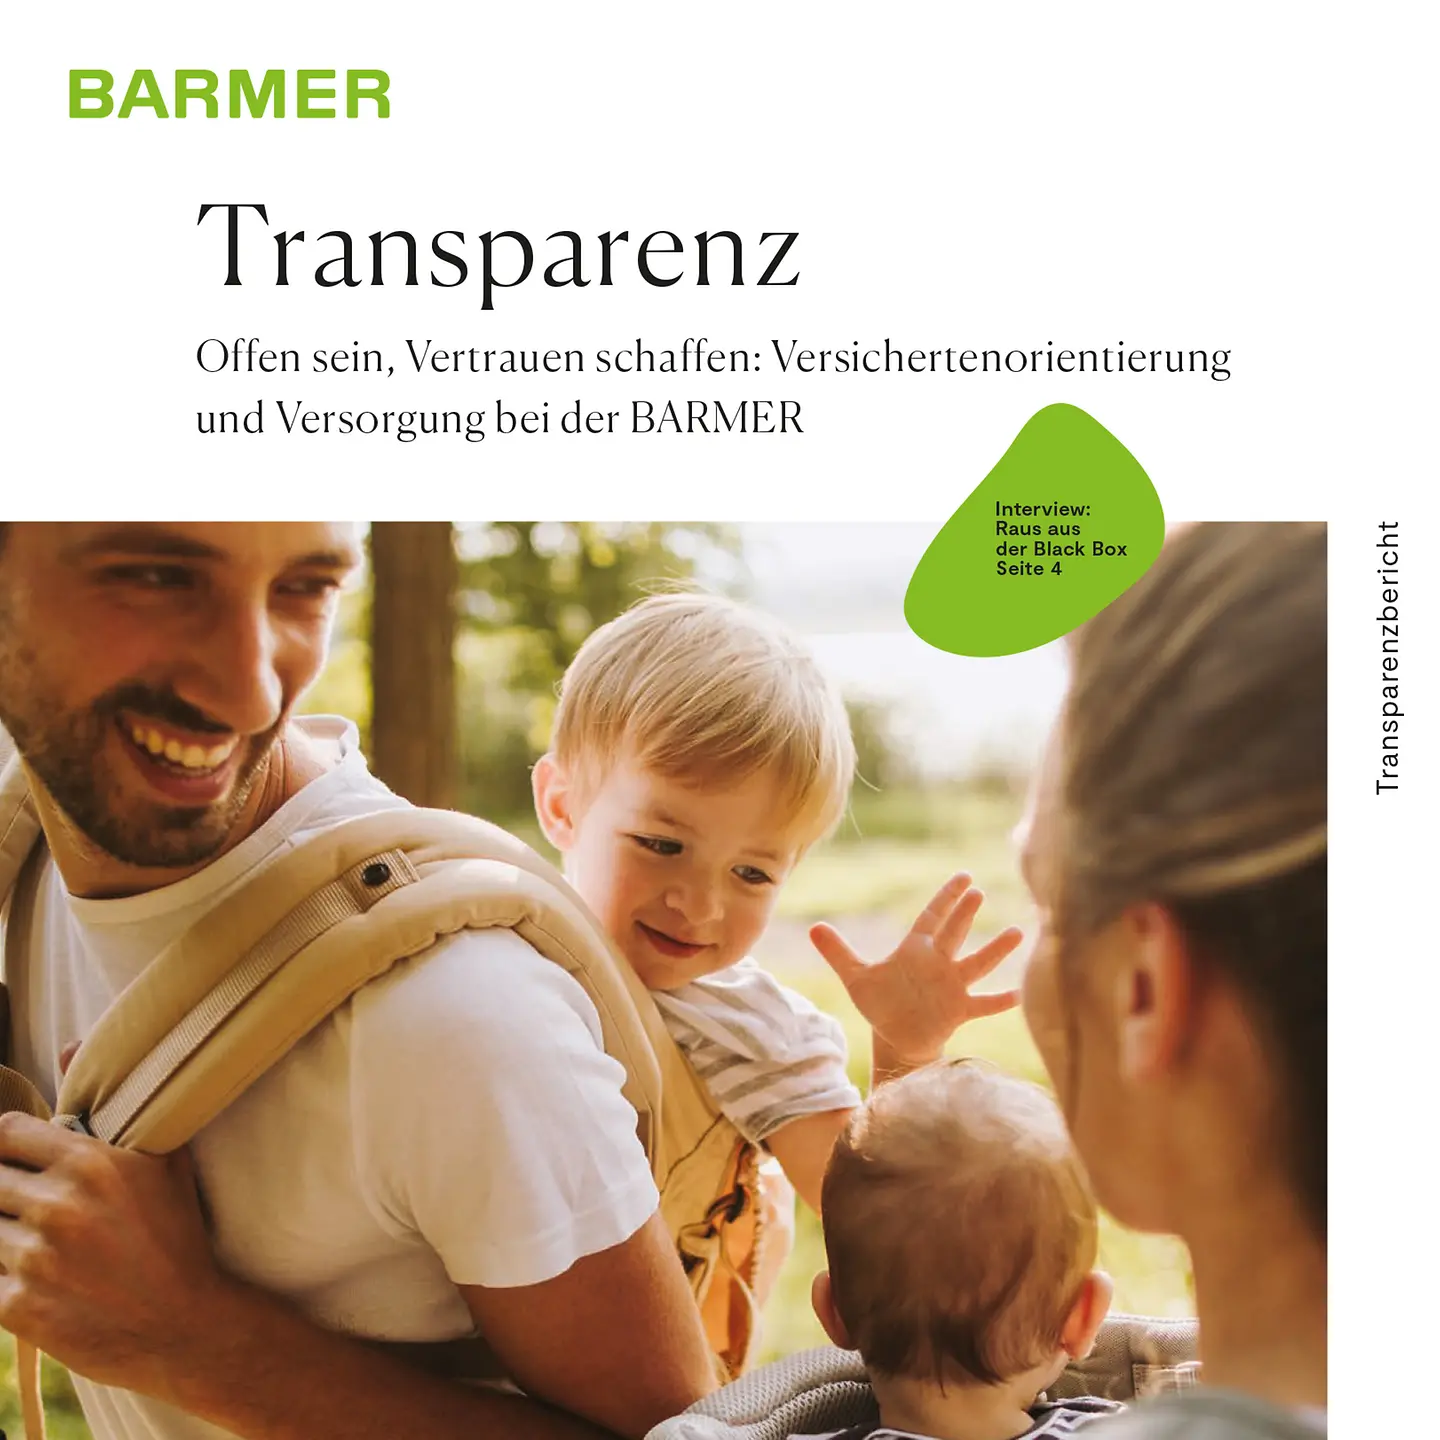 Titel des Barmer Transparenzberichts